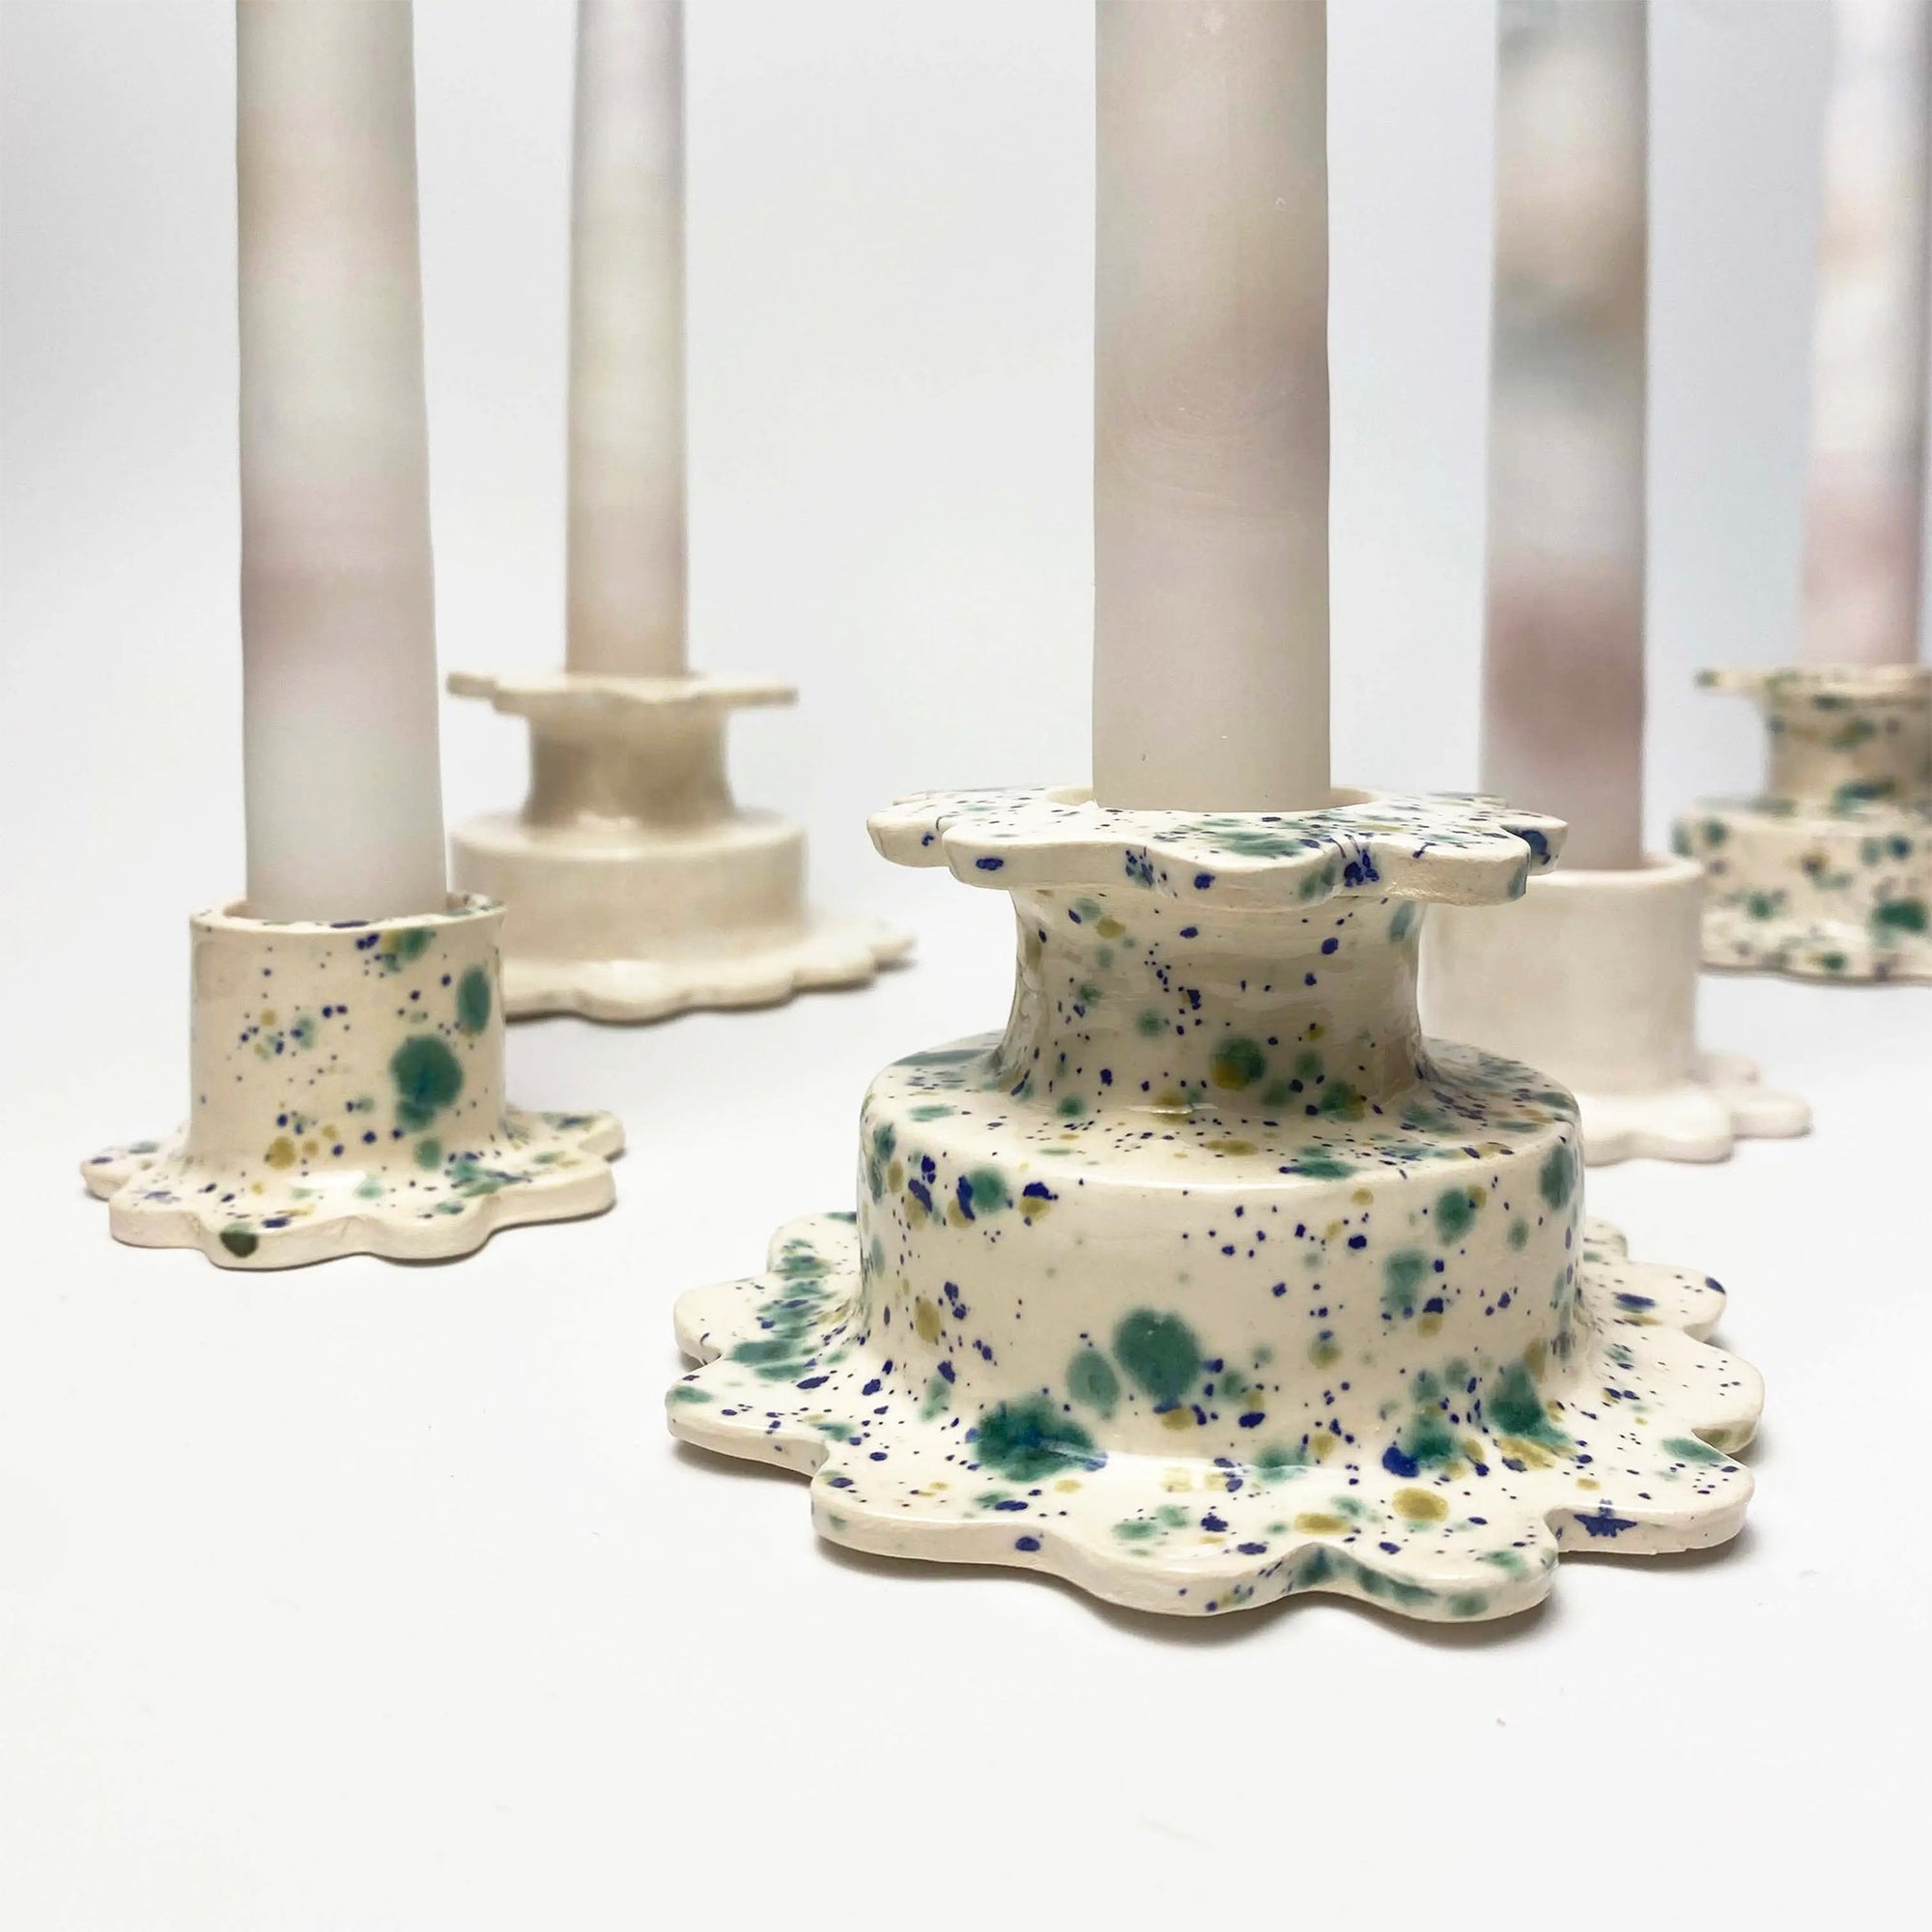 Fooshoo Ceramic Candlestick Holder -Medium- "Green Speckle"